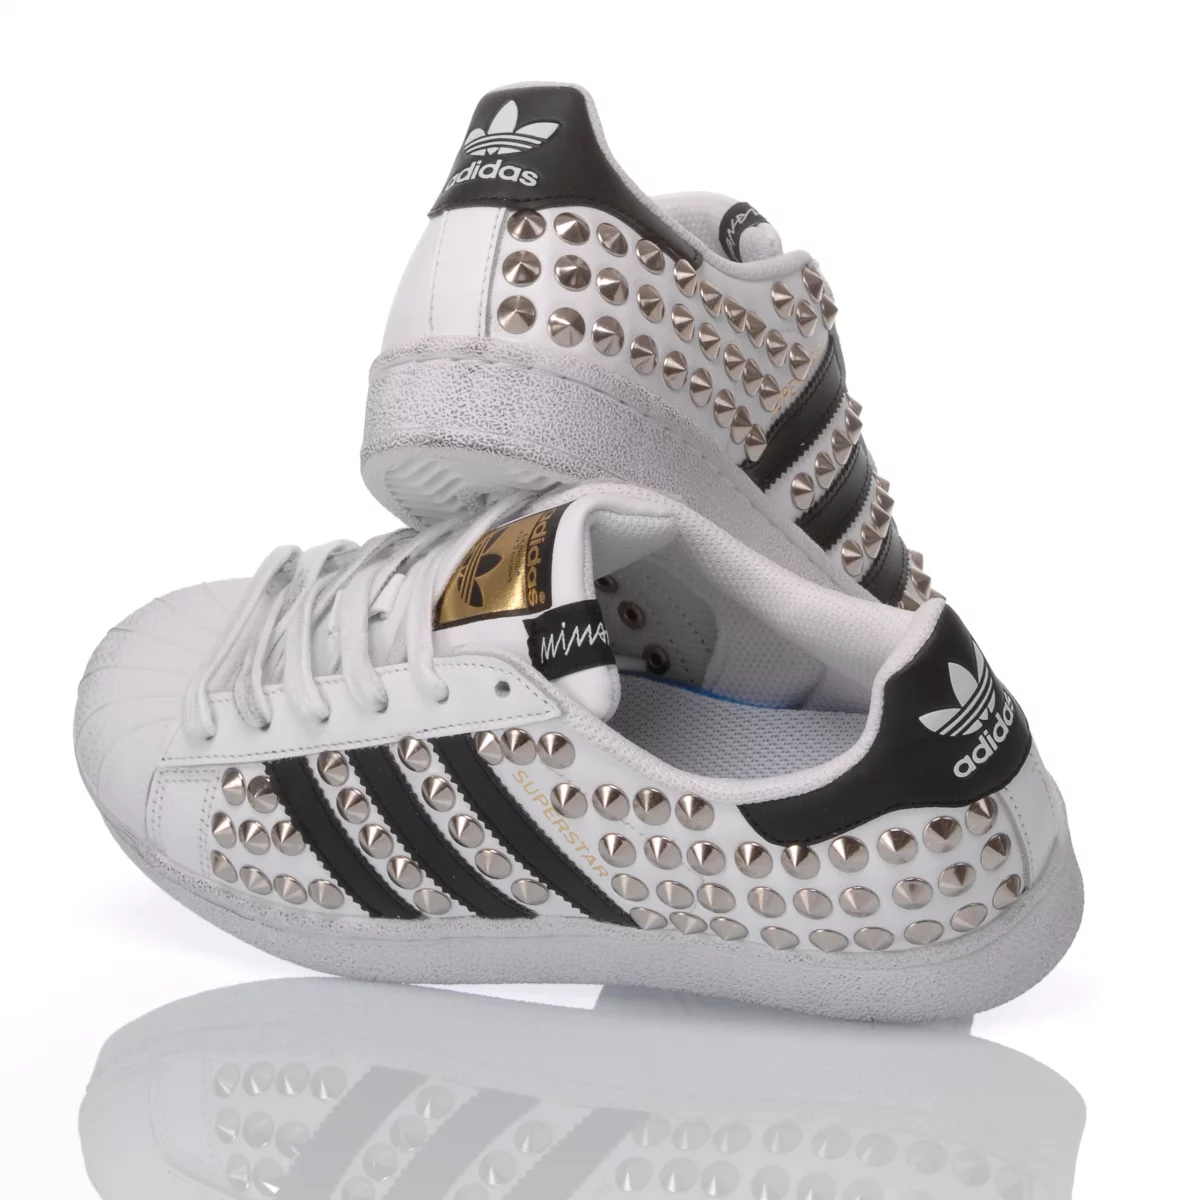 Adidas Superstar London Silver Superstar Borchie